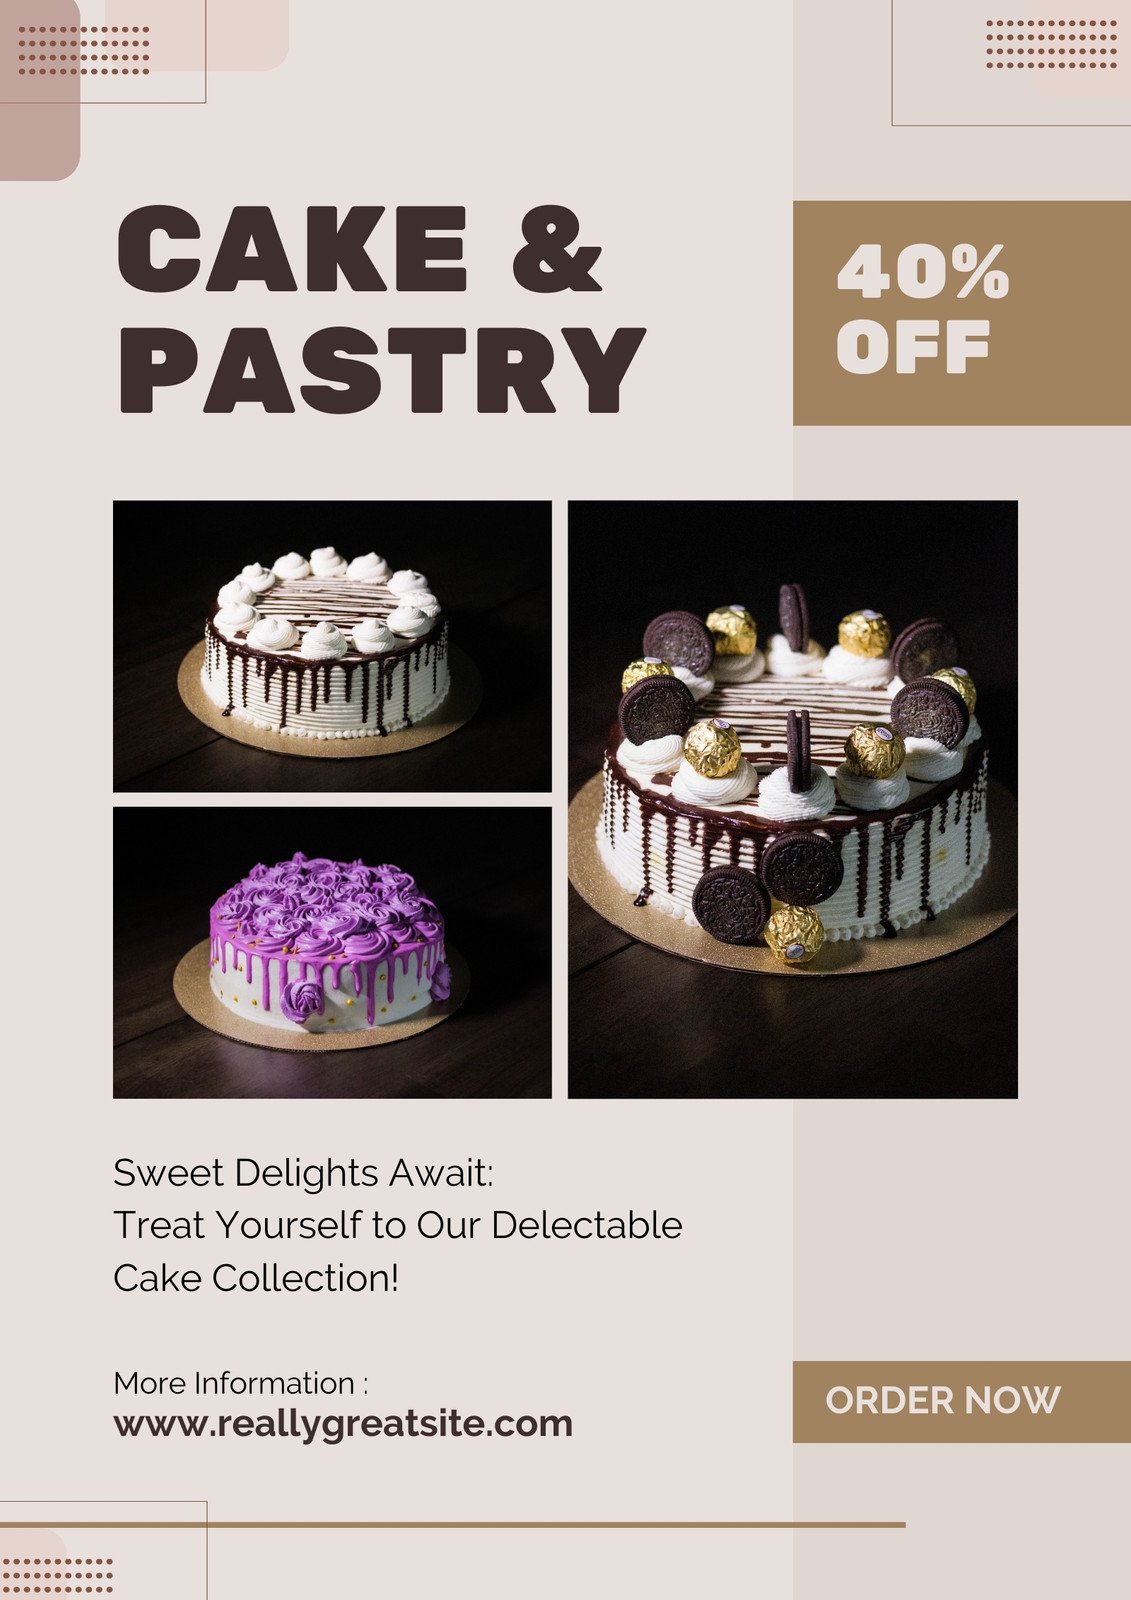 Free Cake Templates - Welcome to CakesStepbyStep.